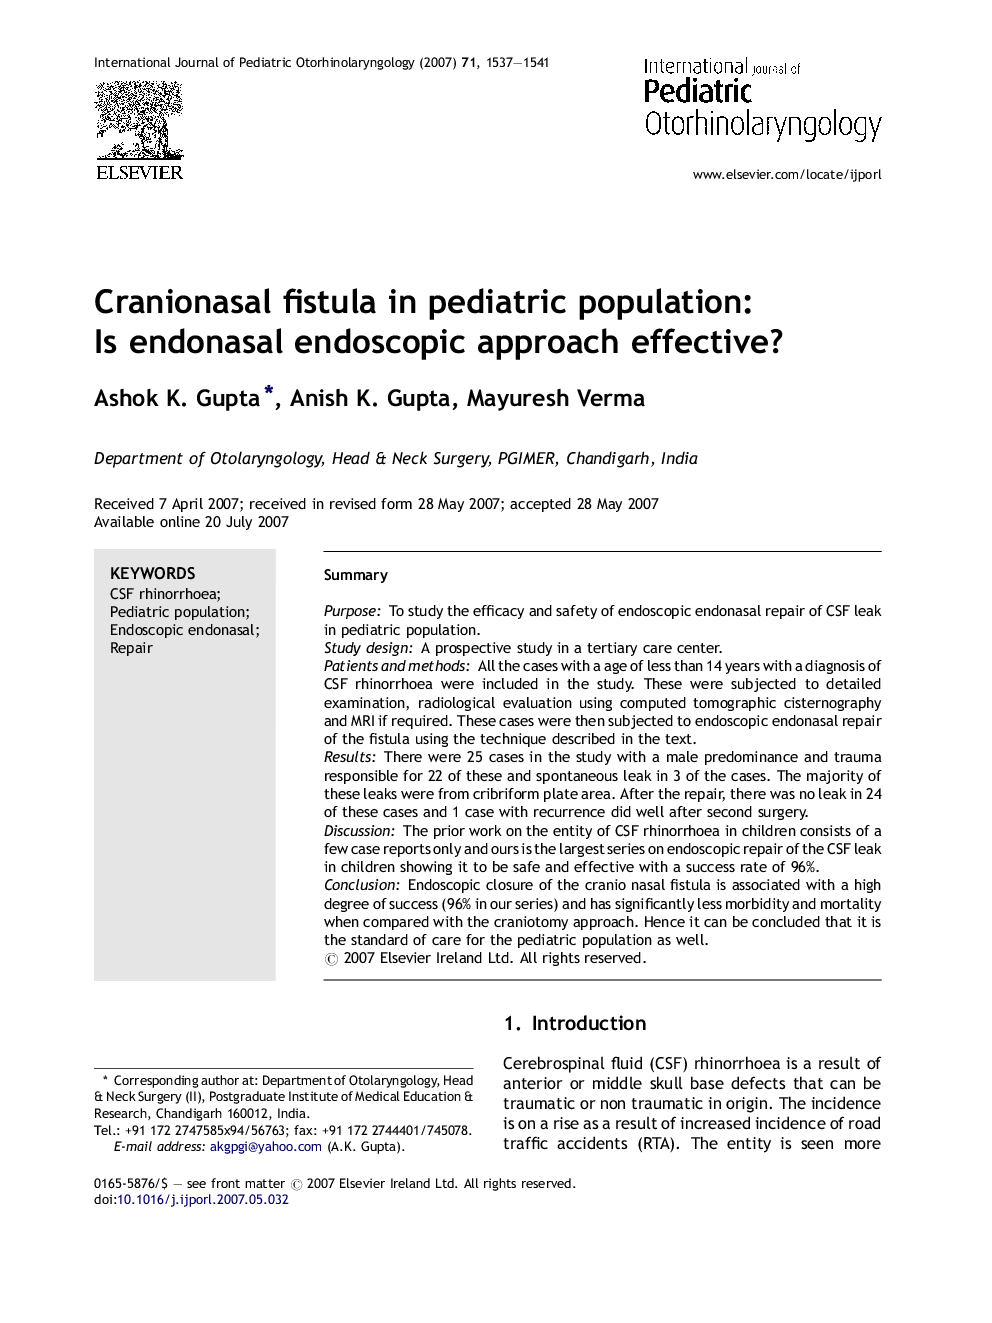 Cranionasal fistula in pediatric population: Is endonasal endoscopic approach effective?